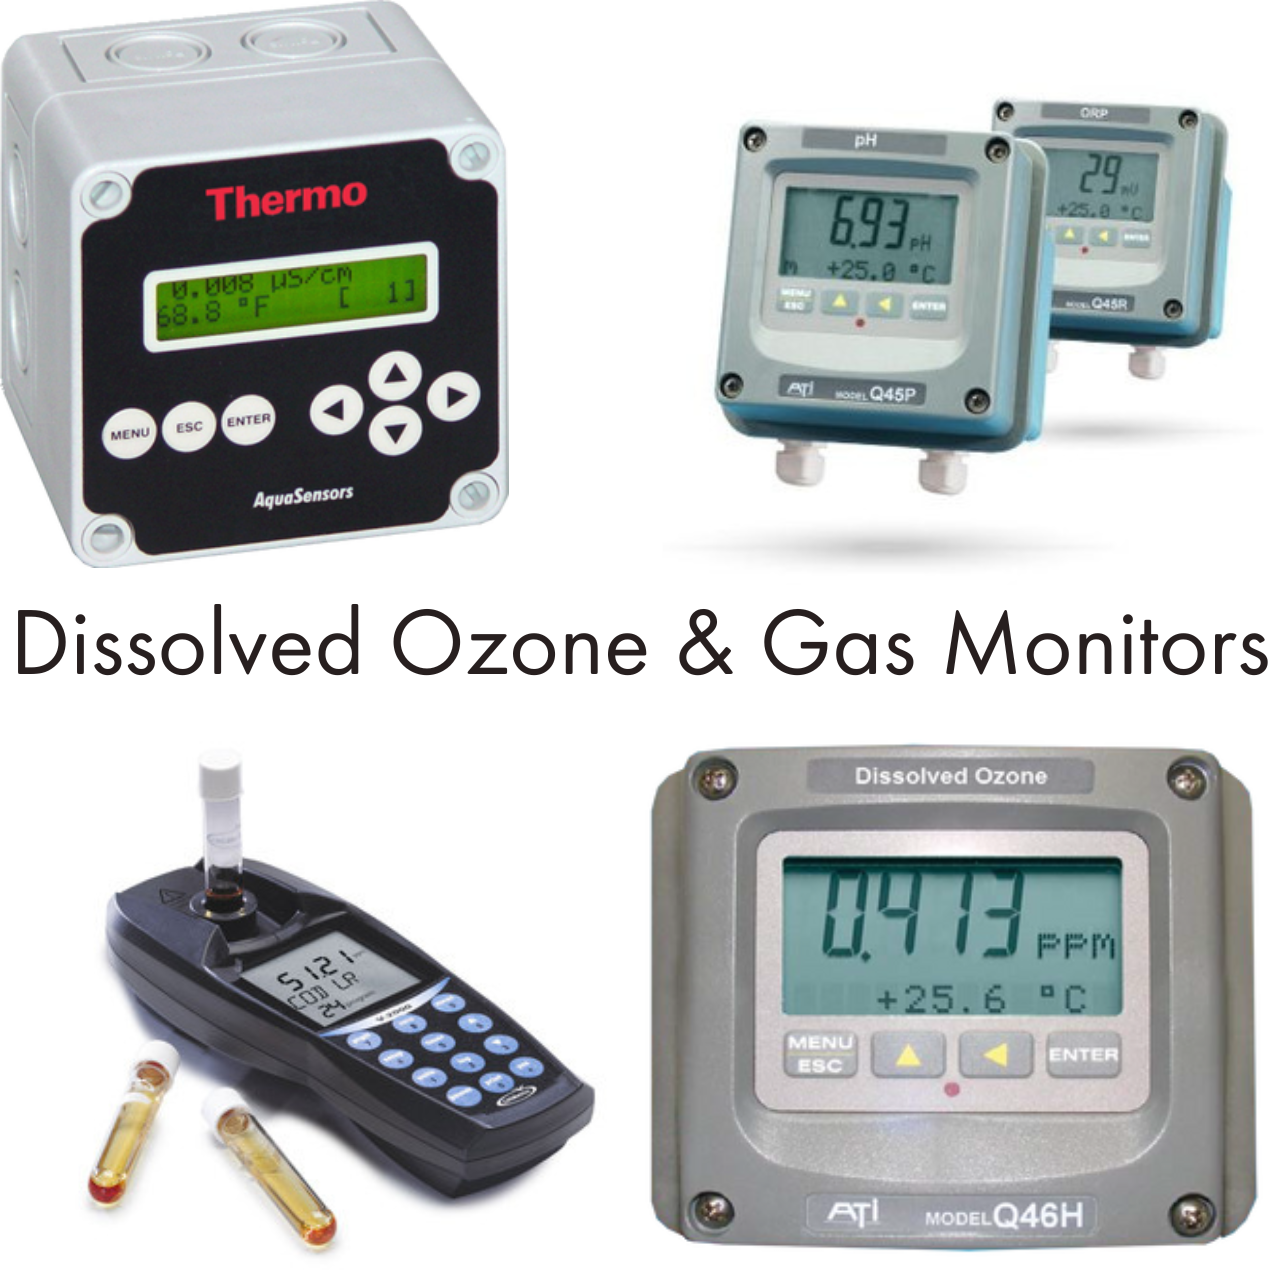 dissolved-ozone-gas-monitors-1280x1280-.png